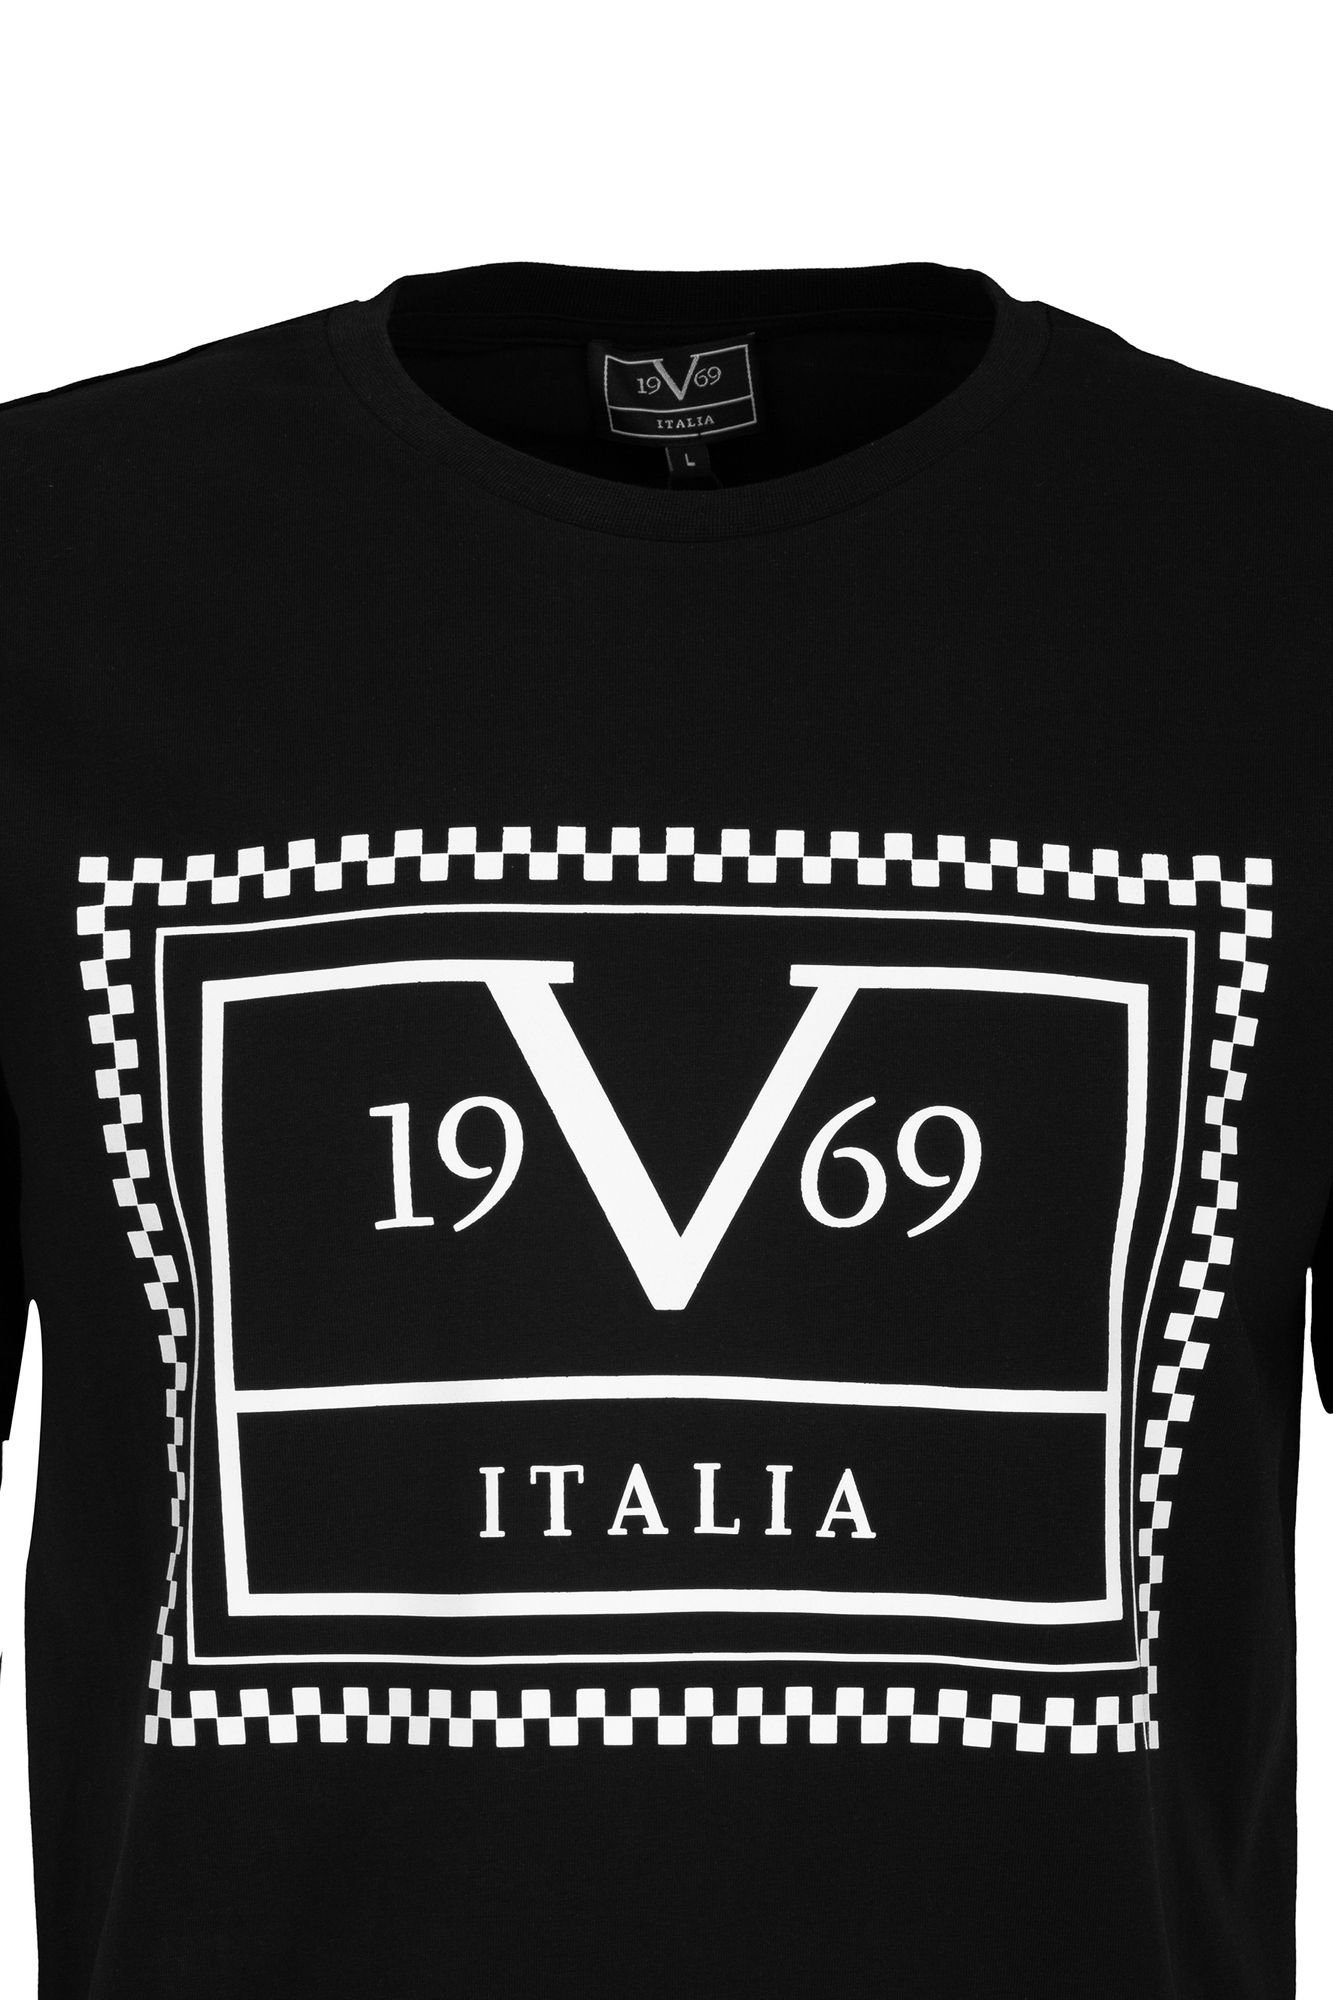 19V69 Giovanni Italia Versace T-Shirt by